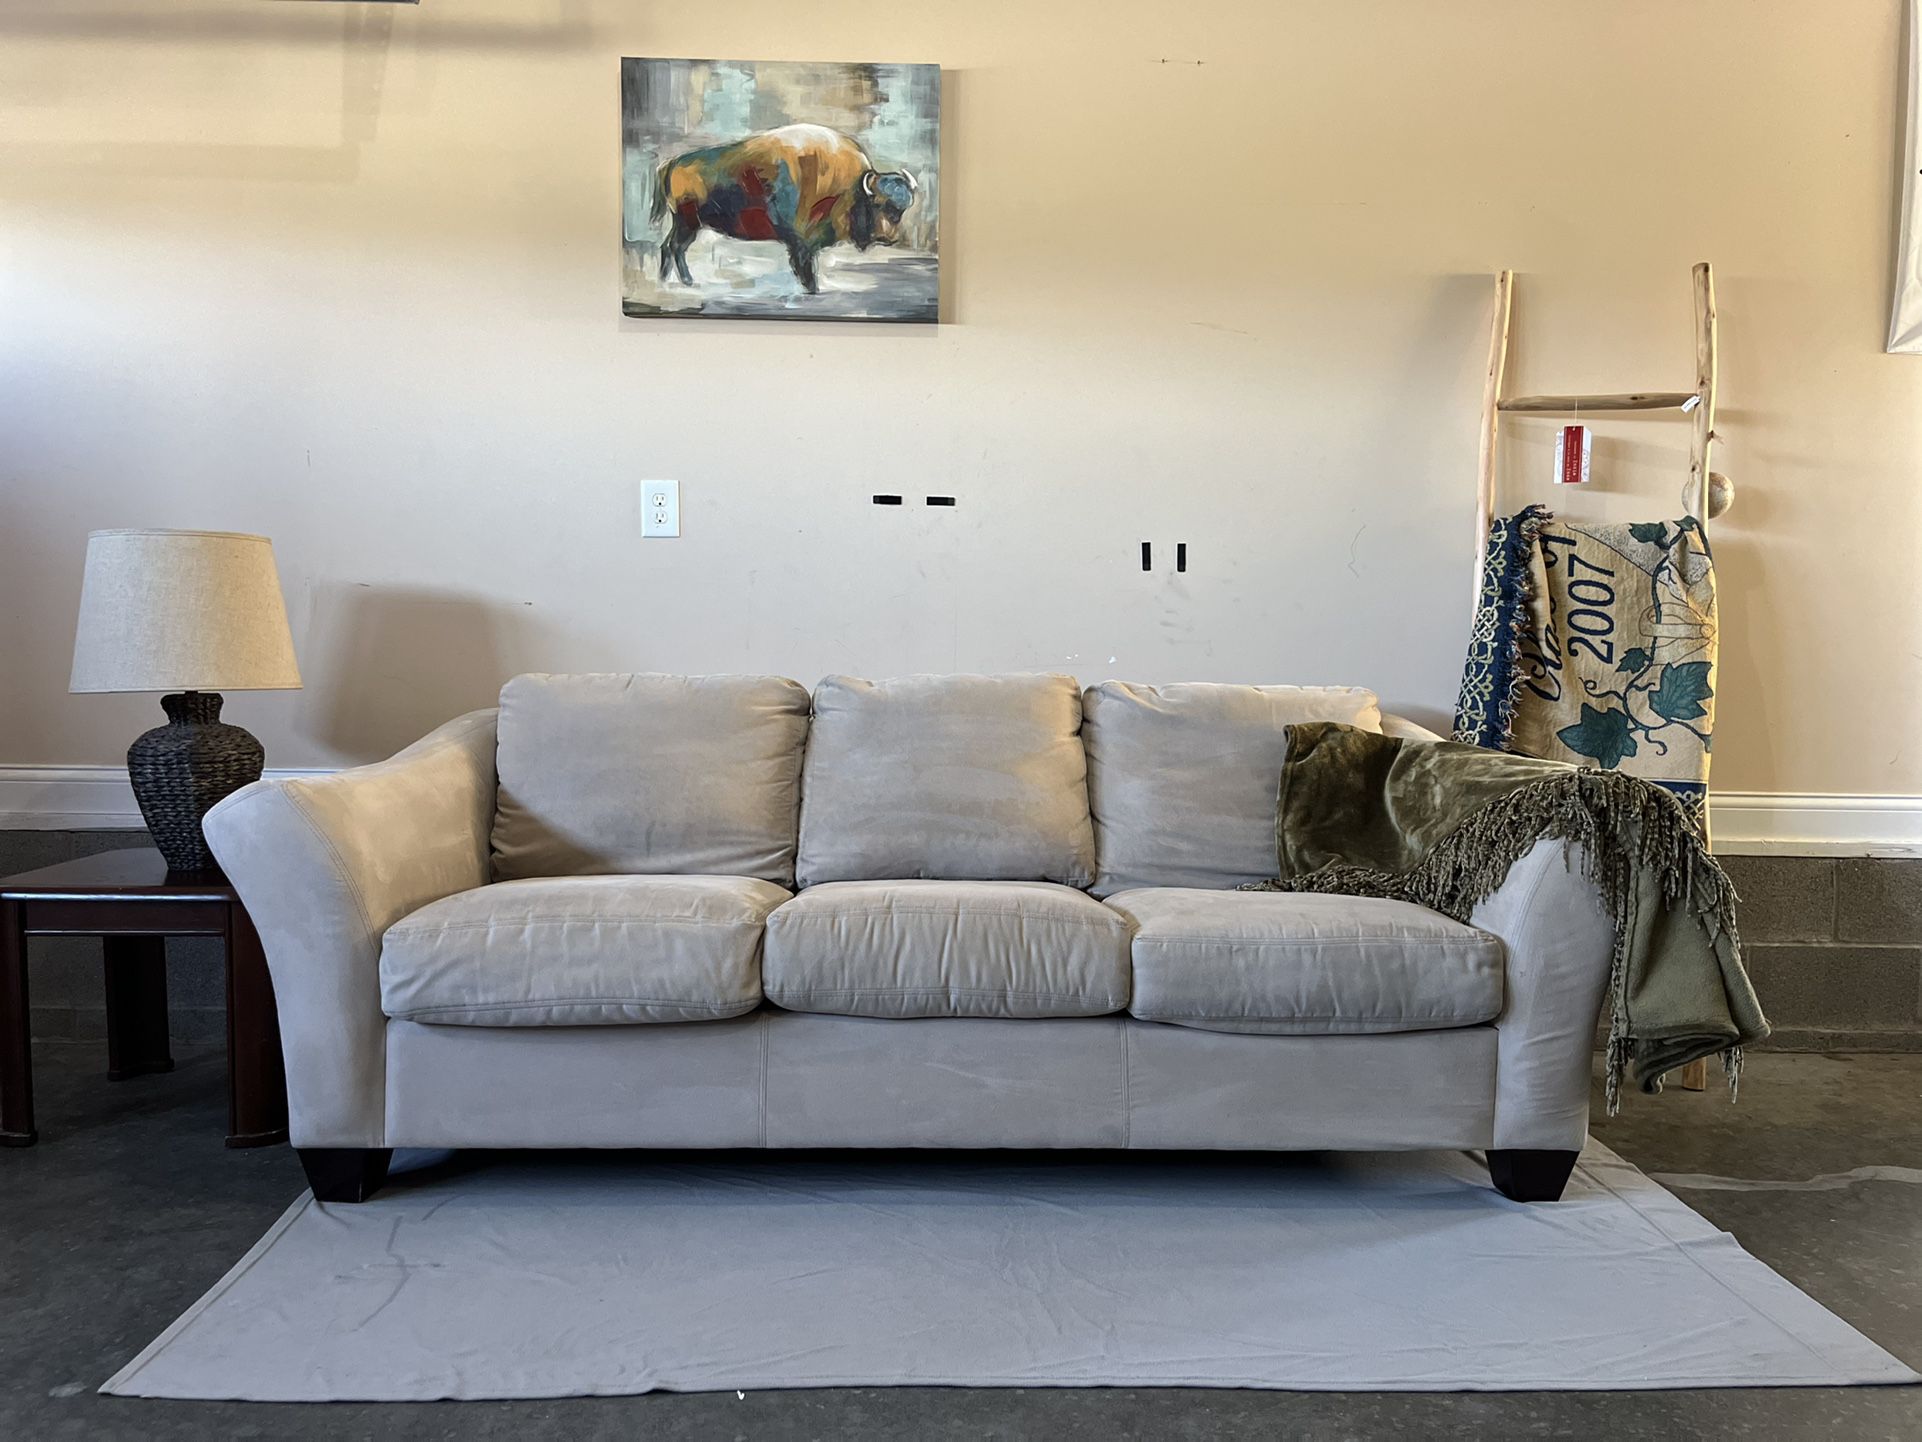 HM Richards Sofa/couch (Super clean cream color)